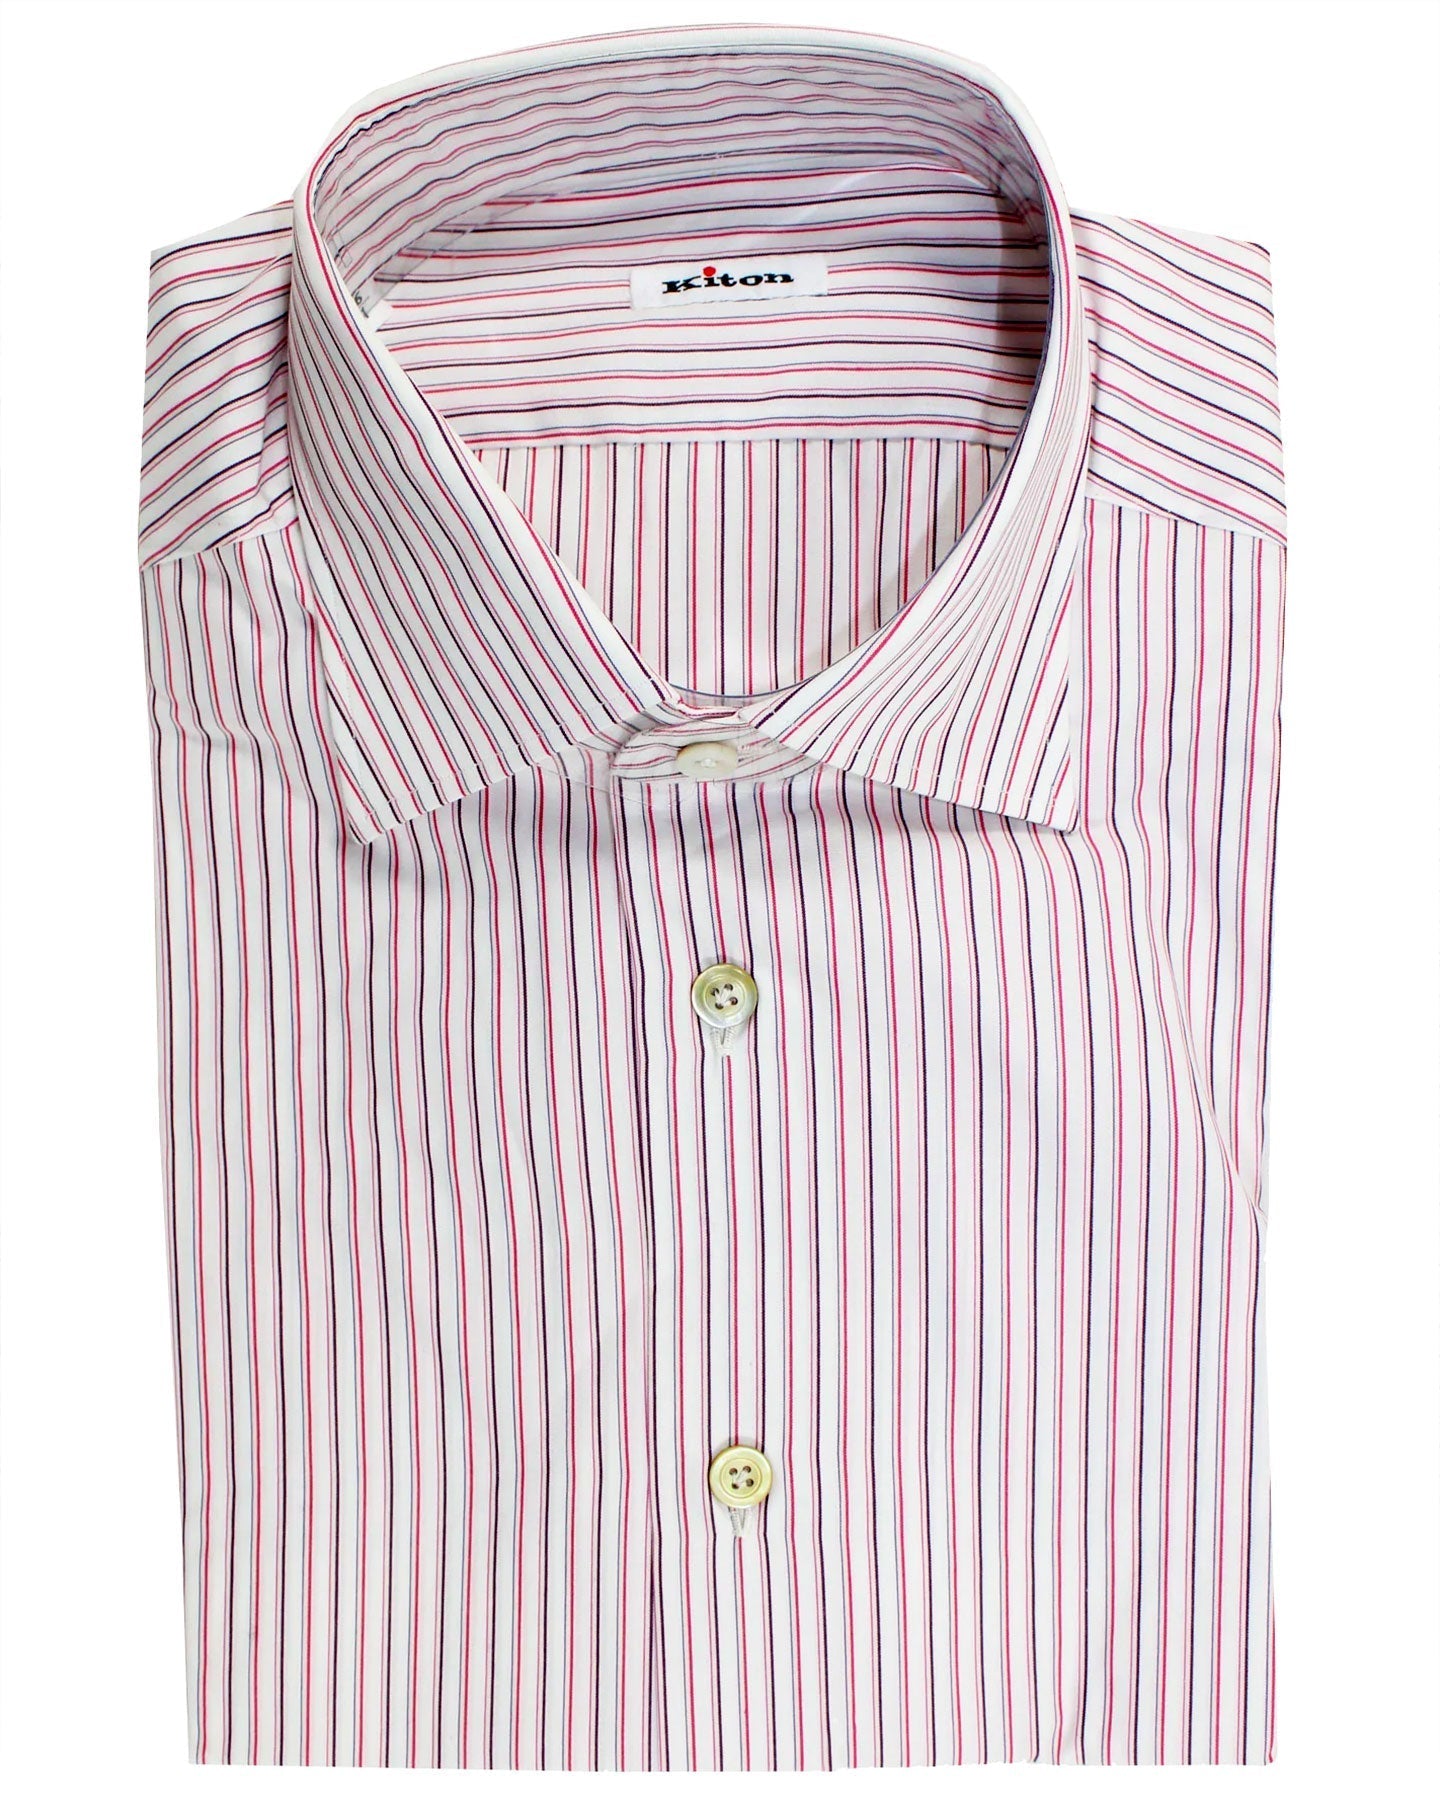 Kiton Dress Shirt White Pink Purple Stripes 44 - 17 1/2